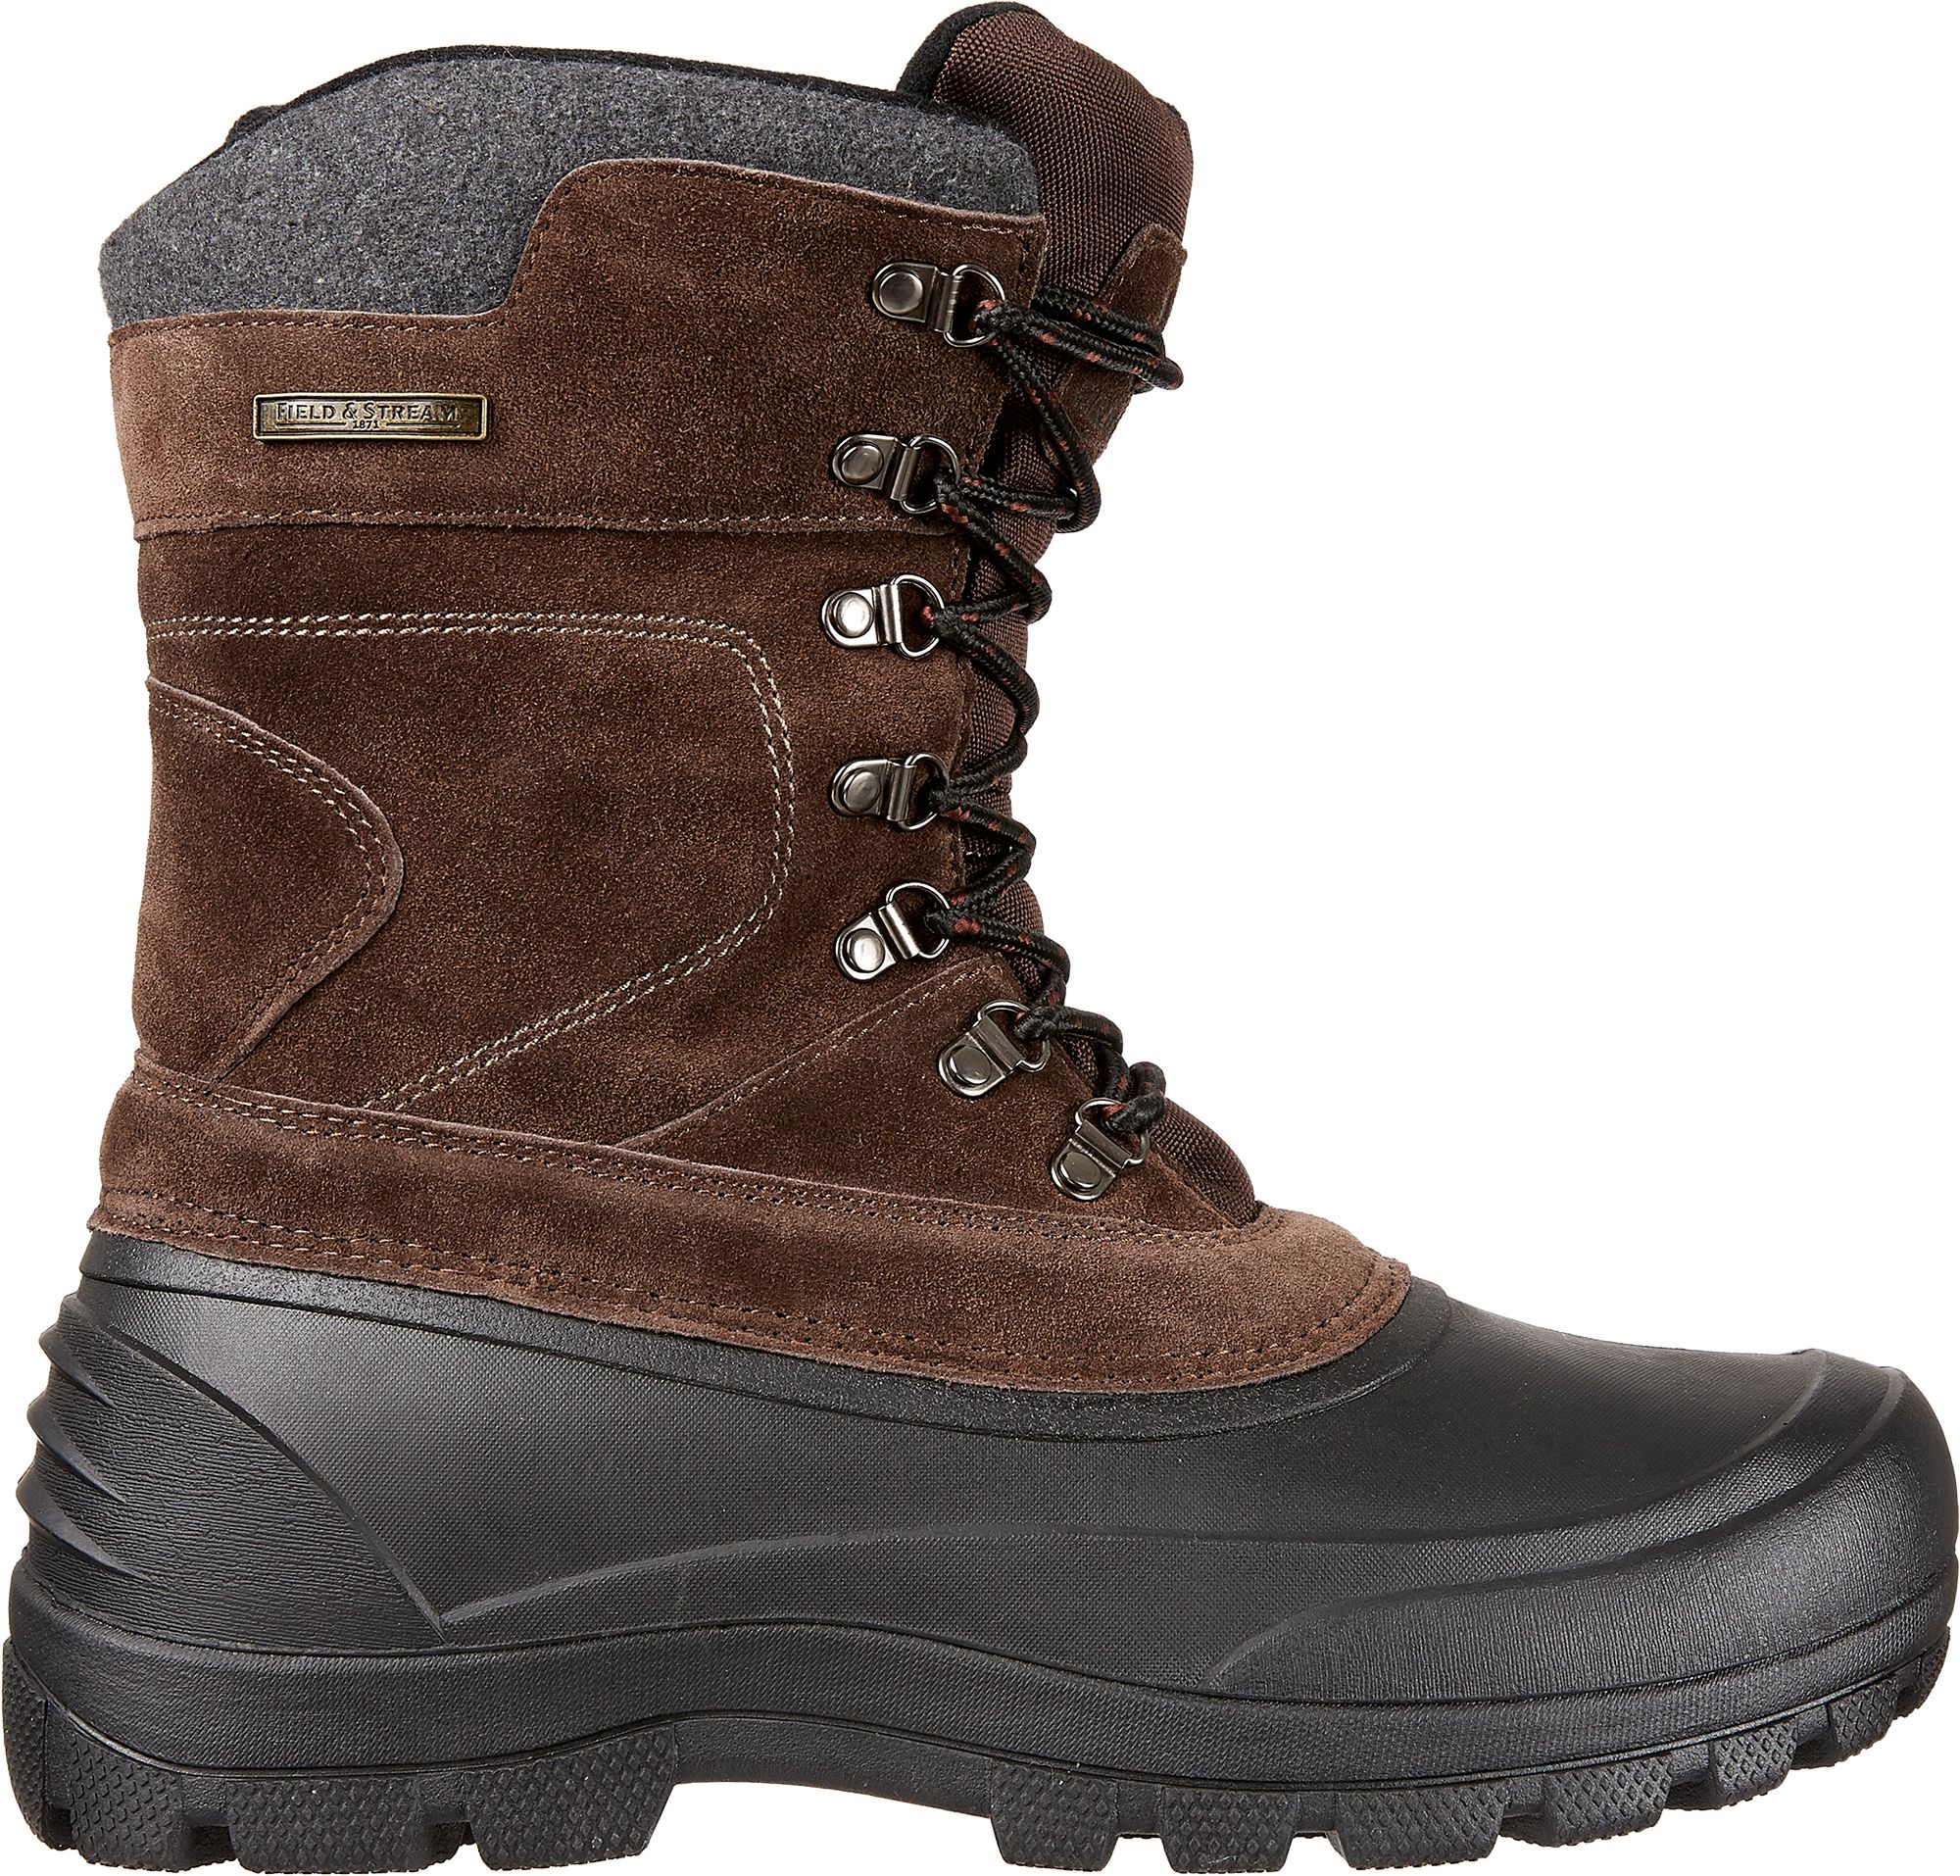 Pac 400g Winter Boots | Field \u0026 Stream